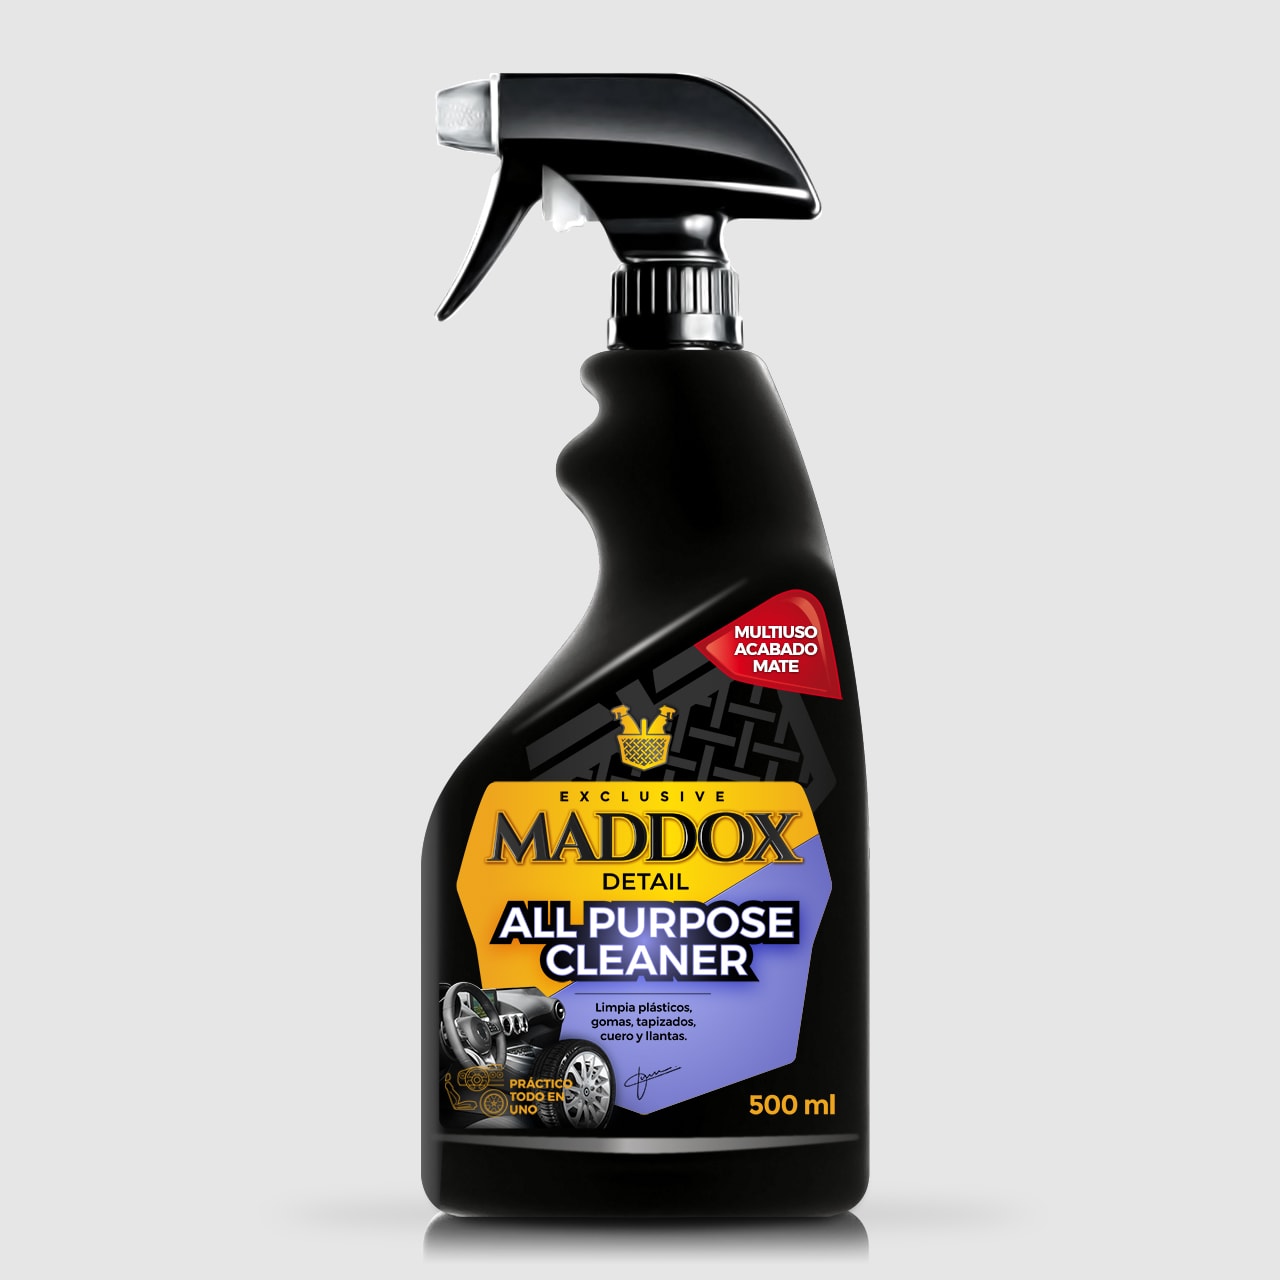 PURPOSE CLEANER – Maddox Detail Car detailing